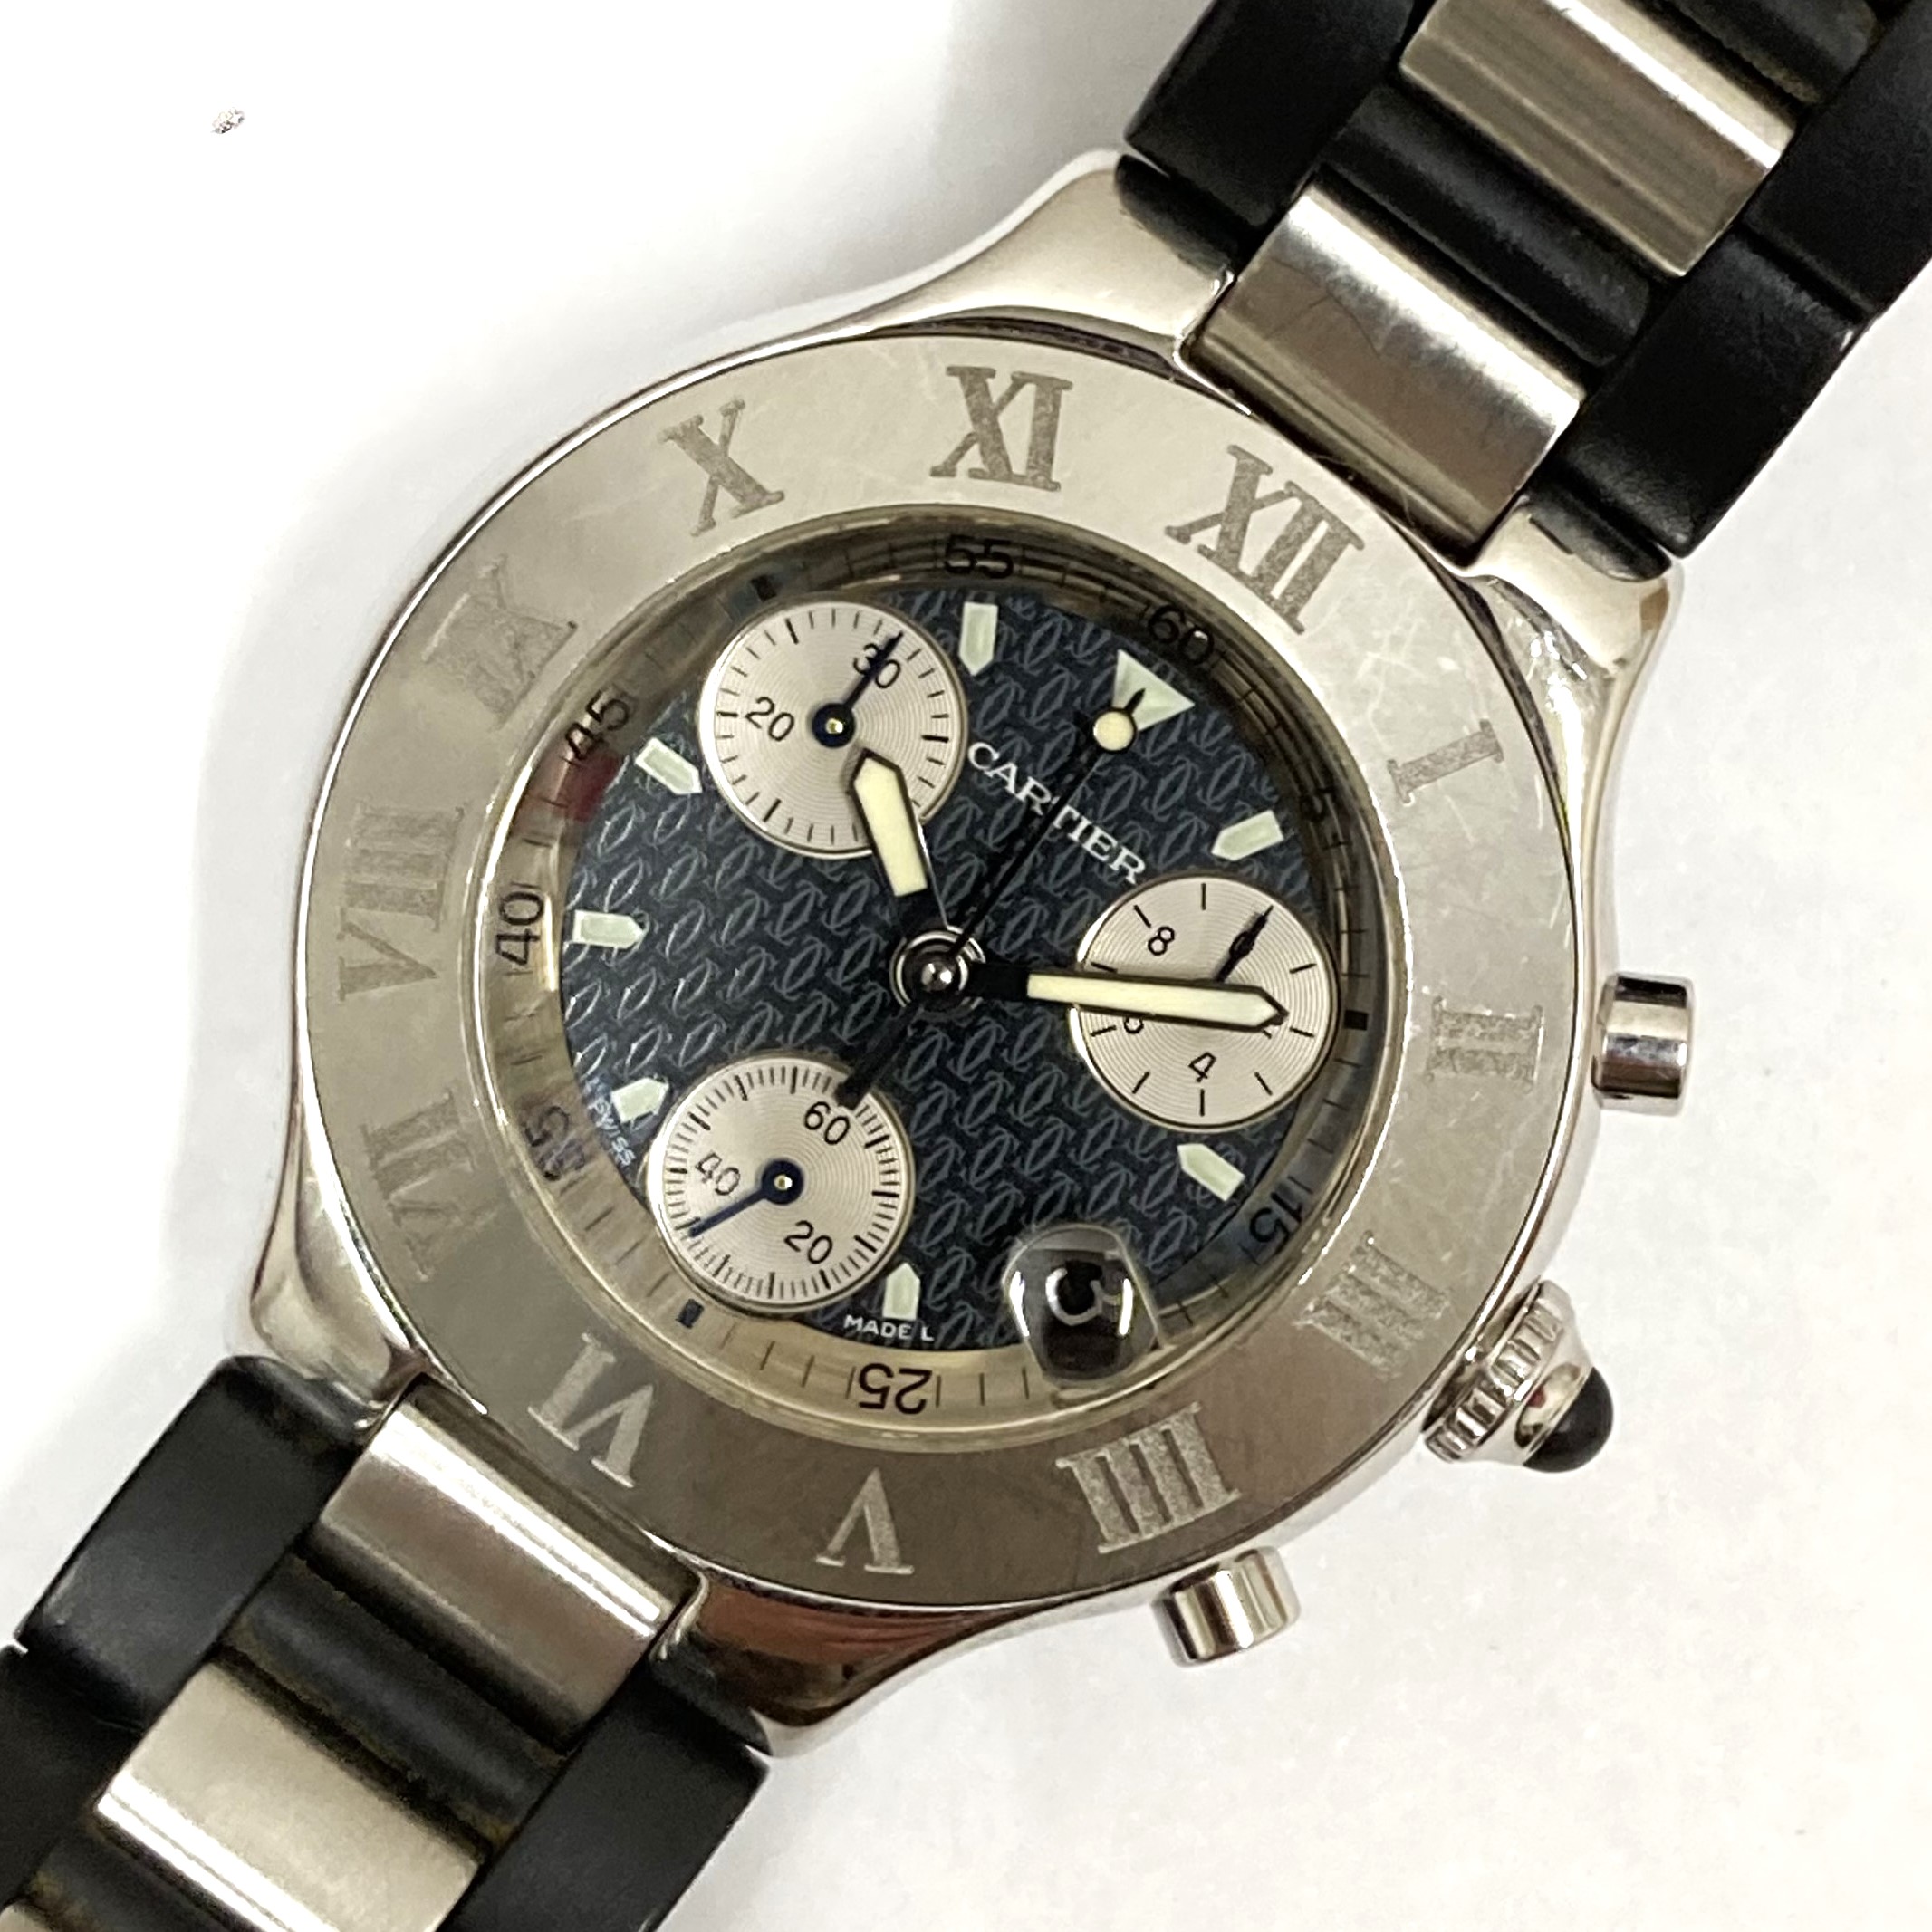 【Cartier/カルティエ】マスト21 クロノスカフLM W10125U2 QZ 腕時計